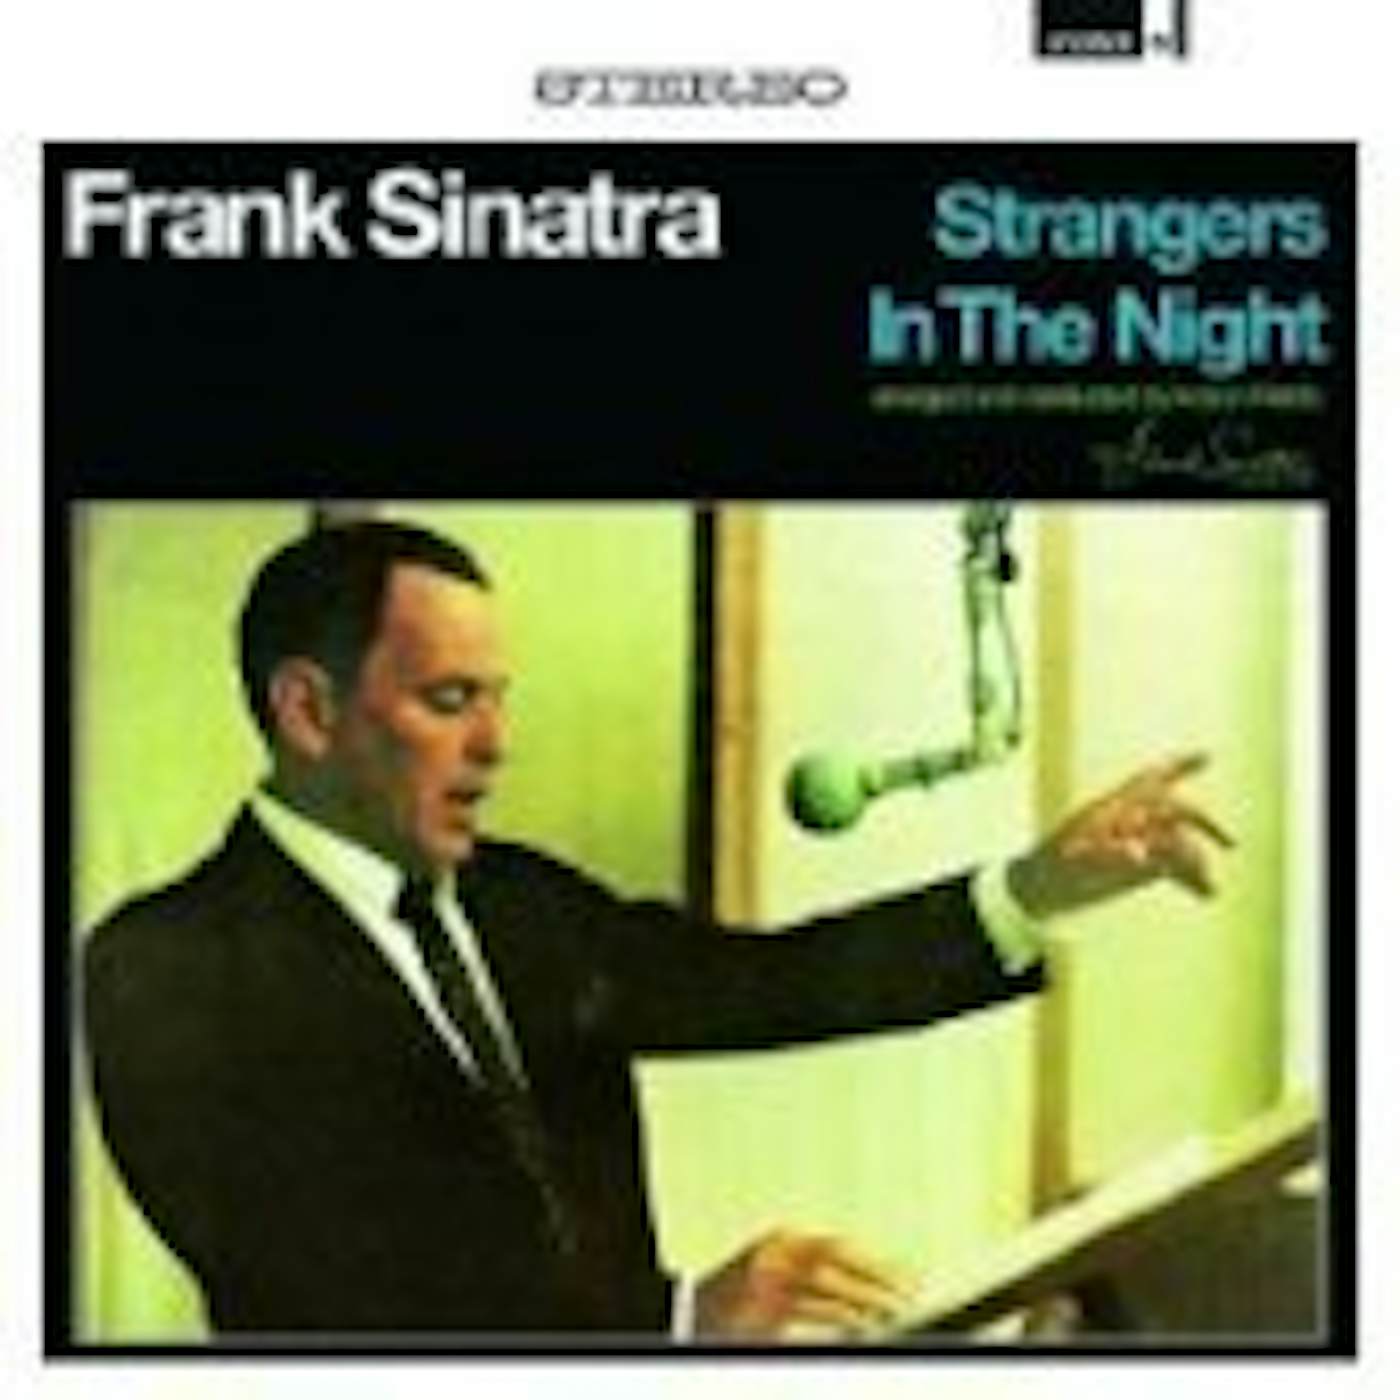 Frank Sinatra STRANGERS IN THE NIGHT CD